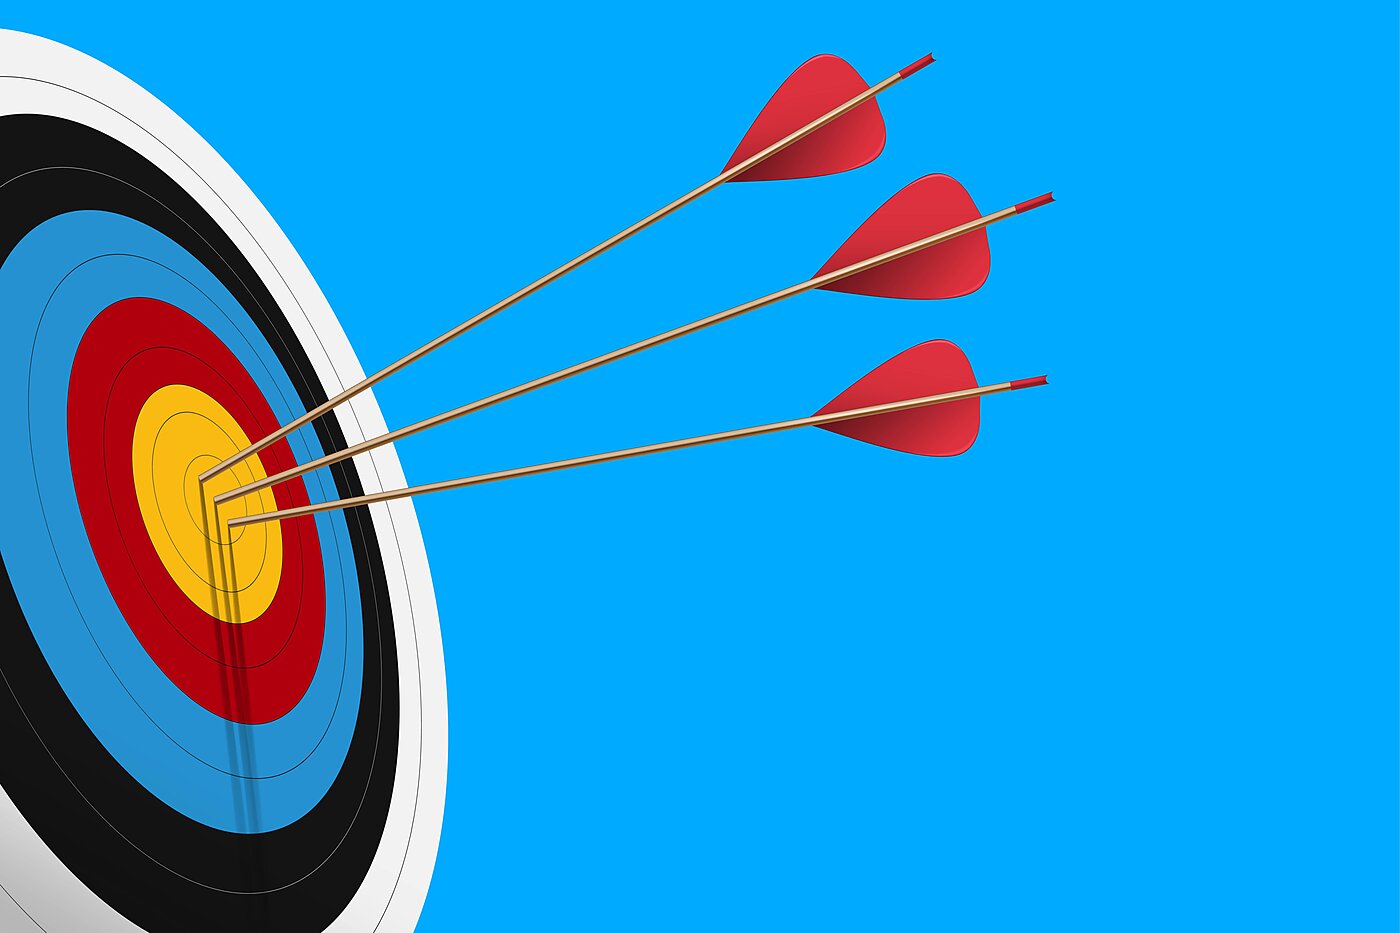 Three arrows hit the bullseye against a blue background